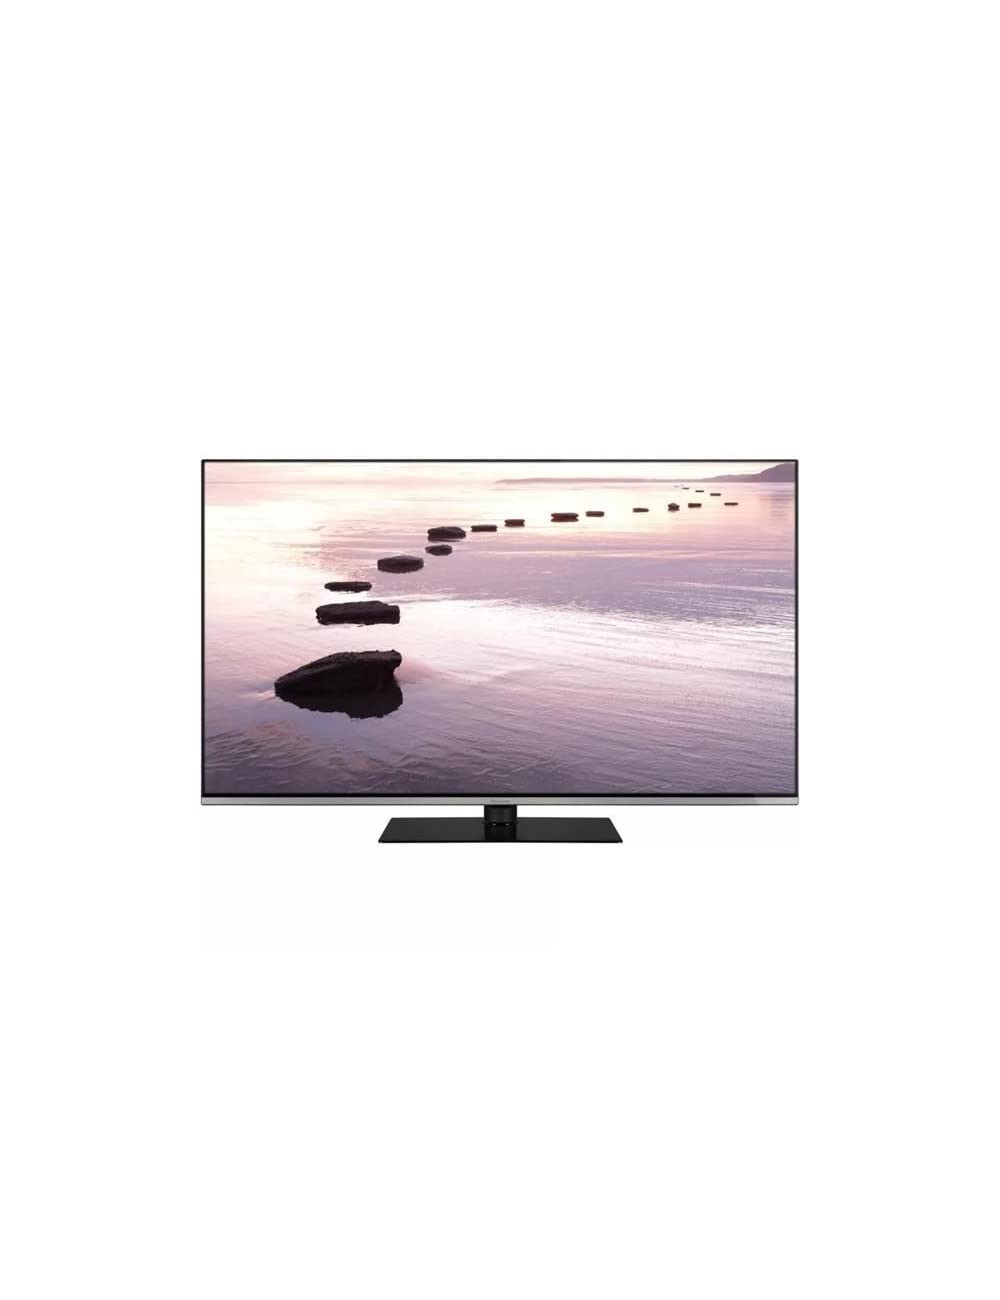 4K LCD TV - 50Hz - Android - 55 inch PANASONIC - TX55LX670E